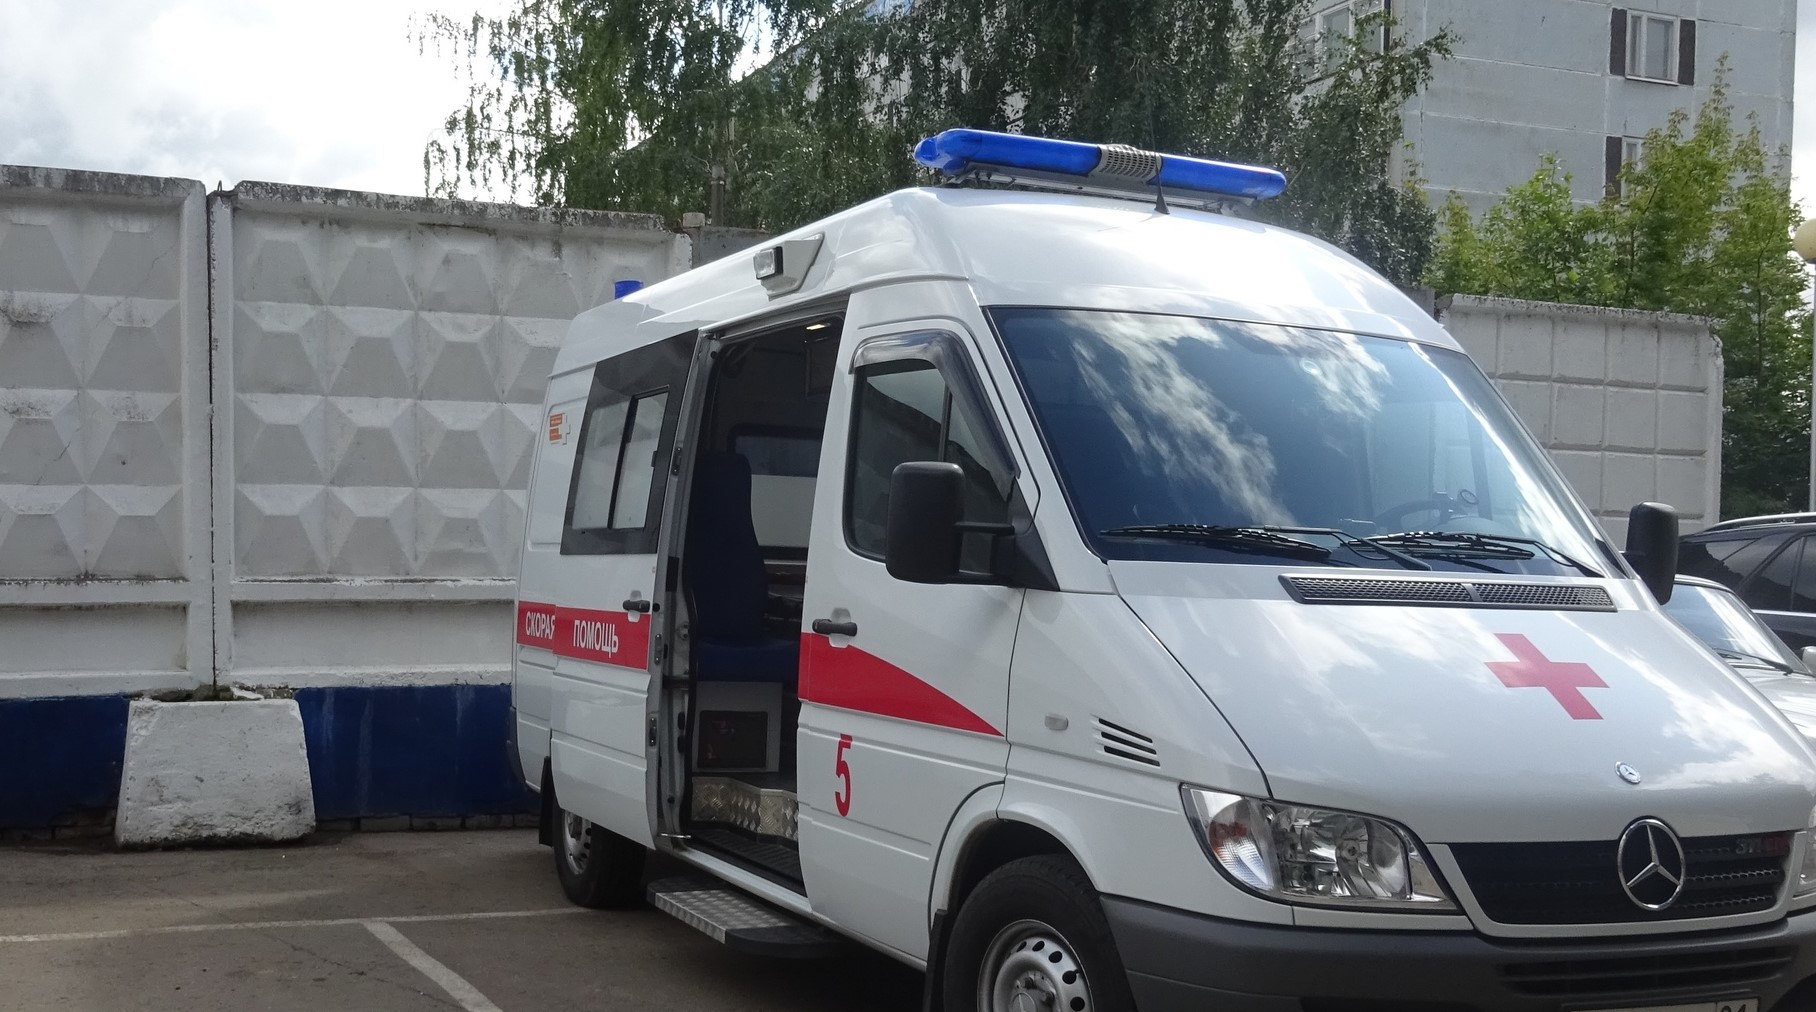 Нижегородского врача оштрафовали из-за машины, помешавшей везти тяжелобольного пациента